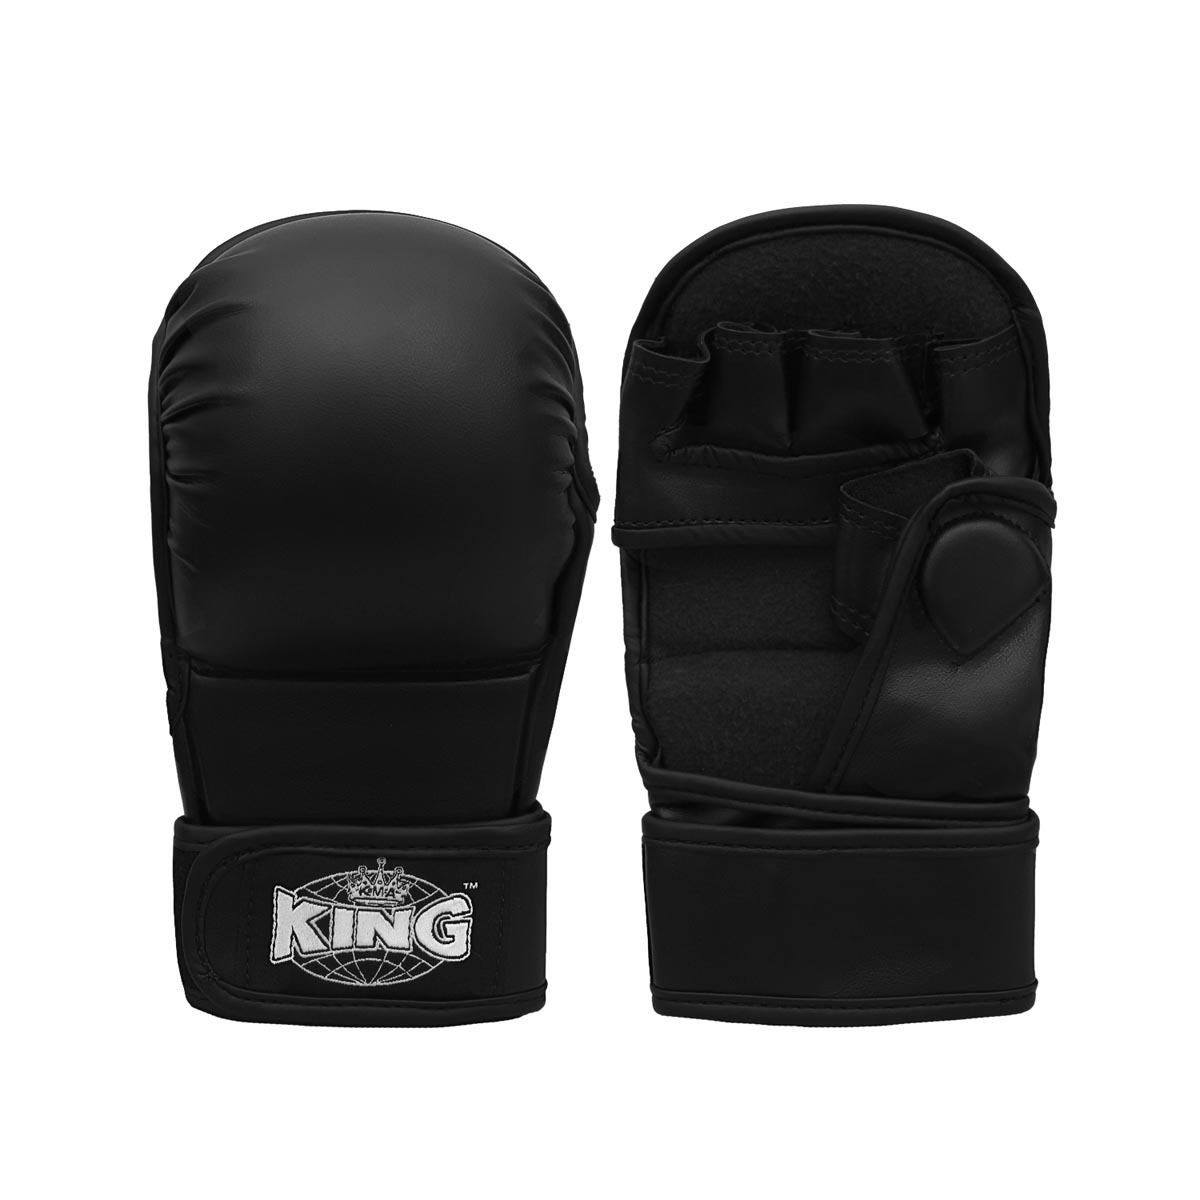 King Padded MMA Gloves